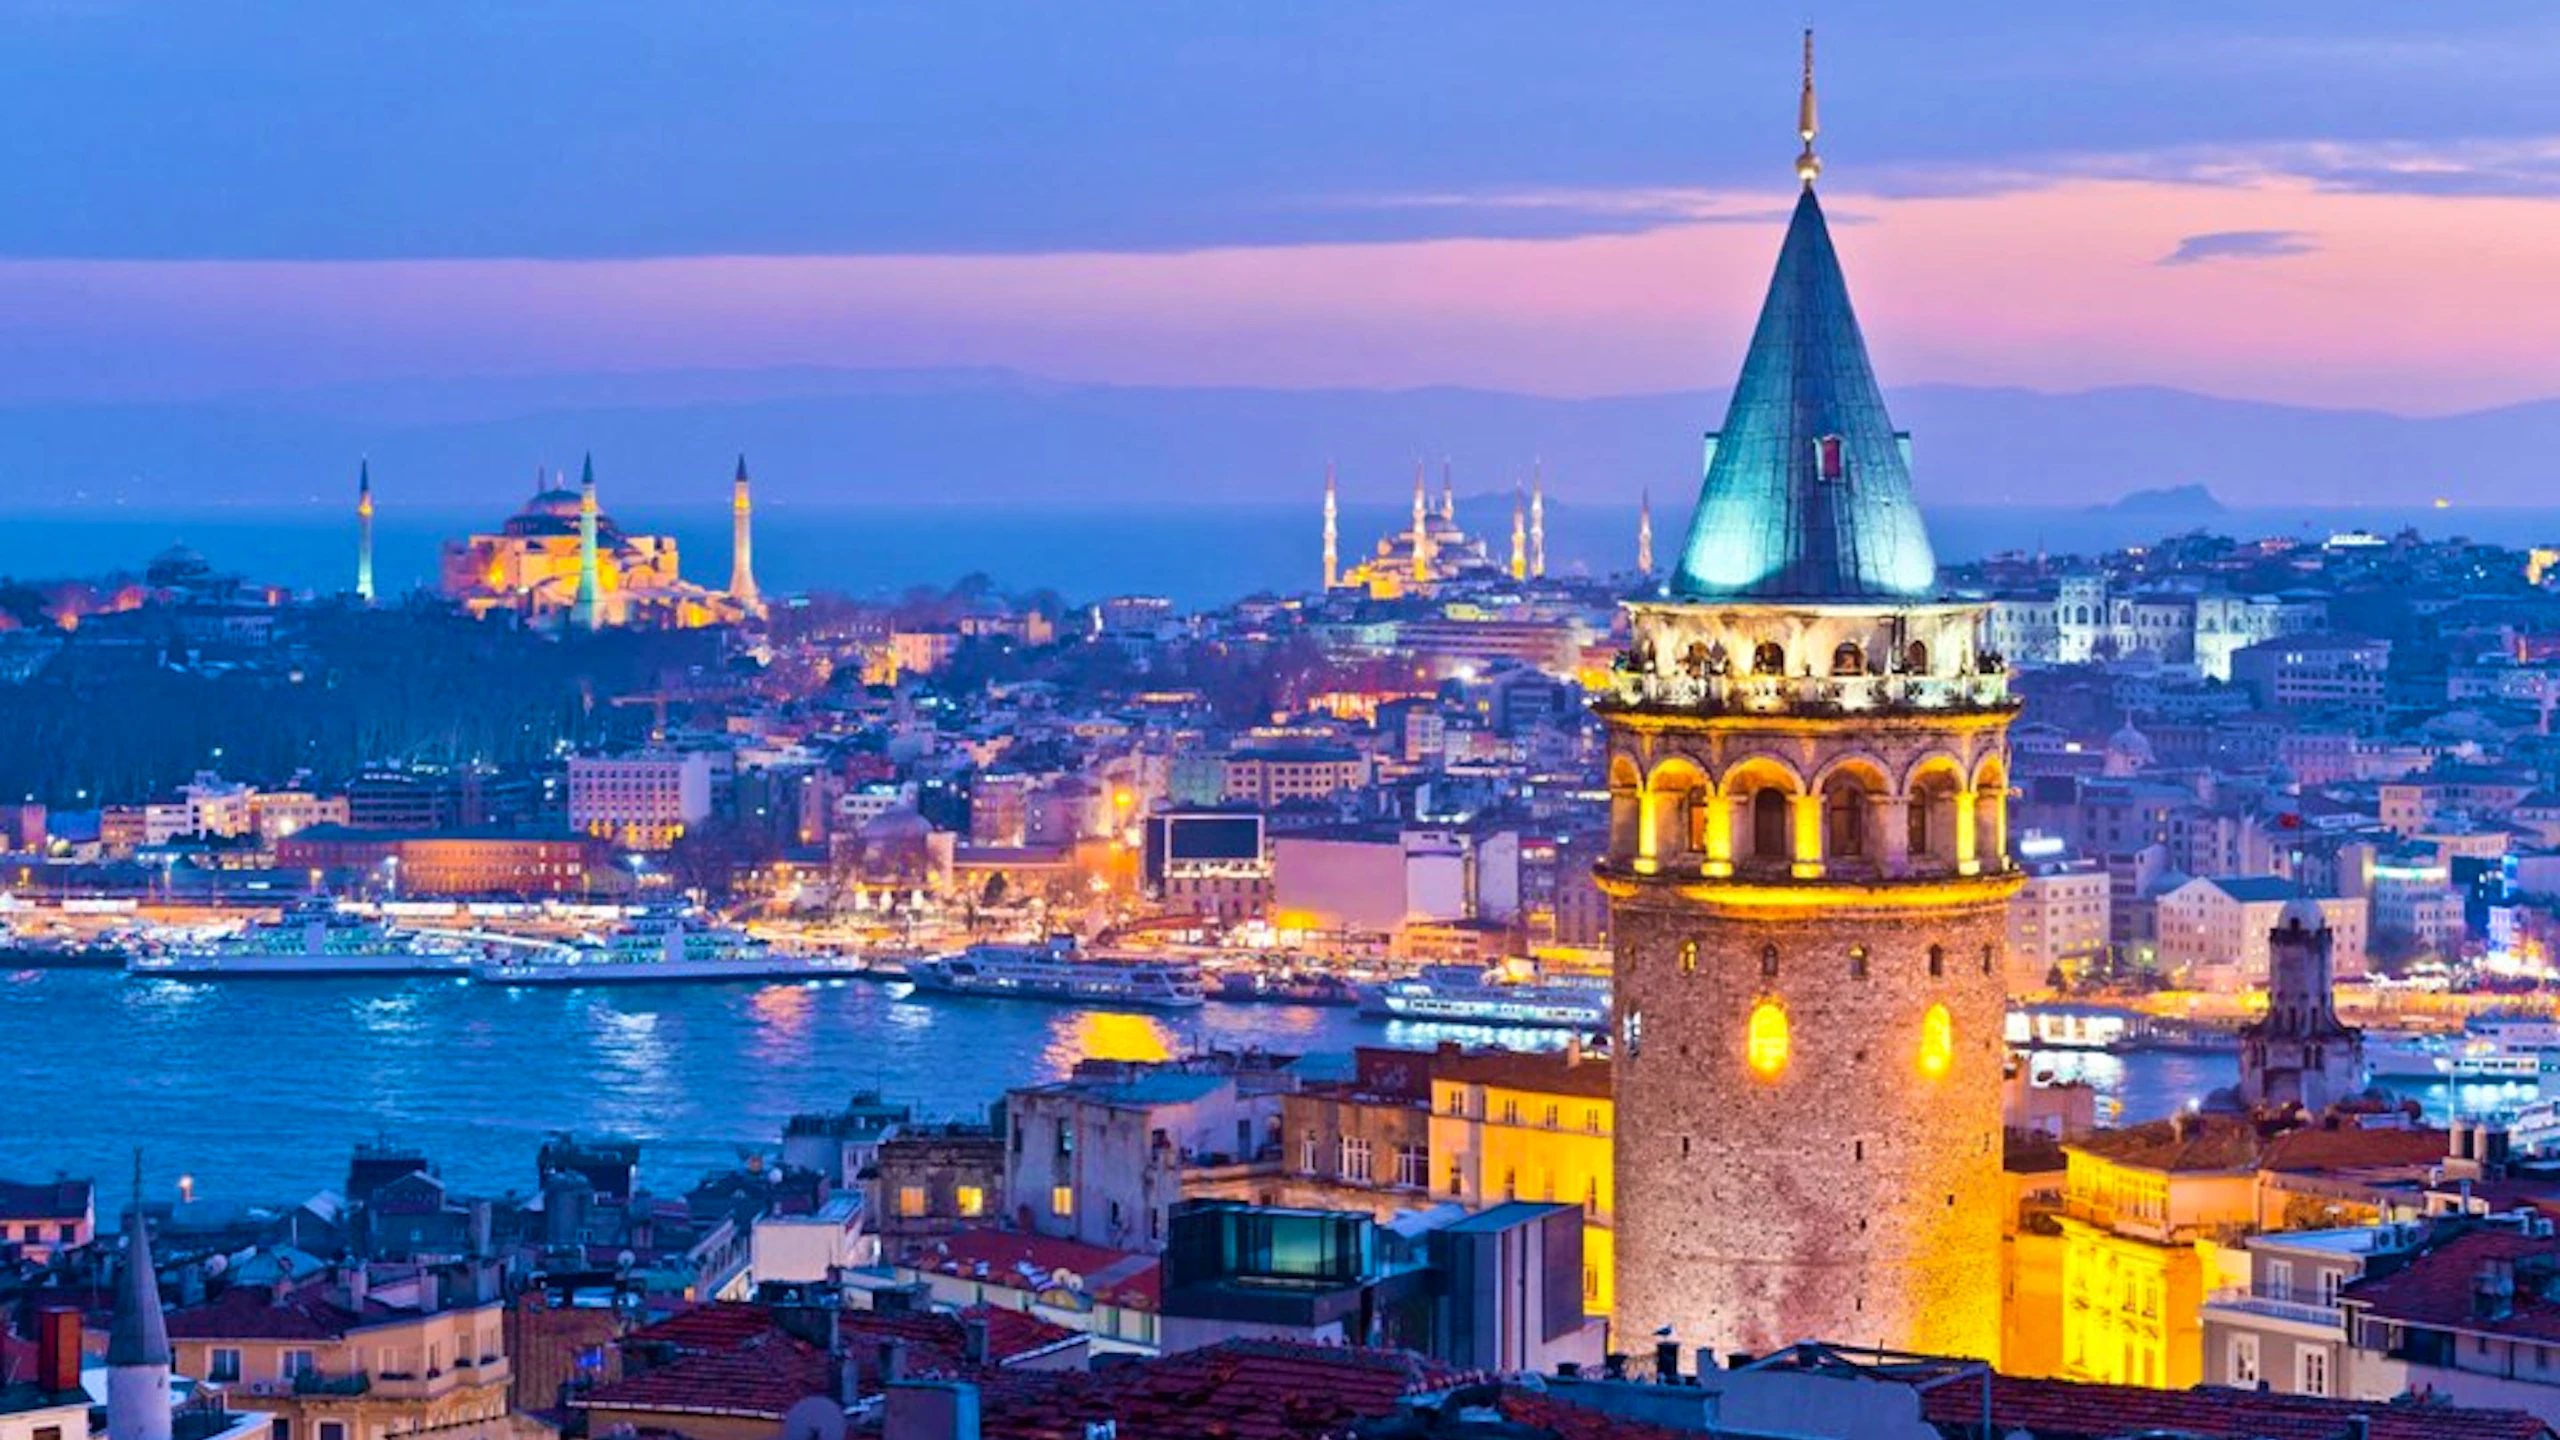 Bosphorus Cruise with Spice Bazaar